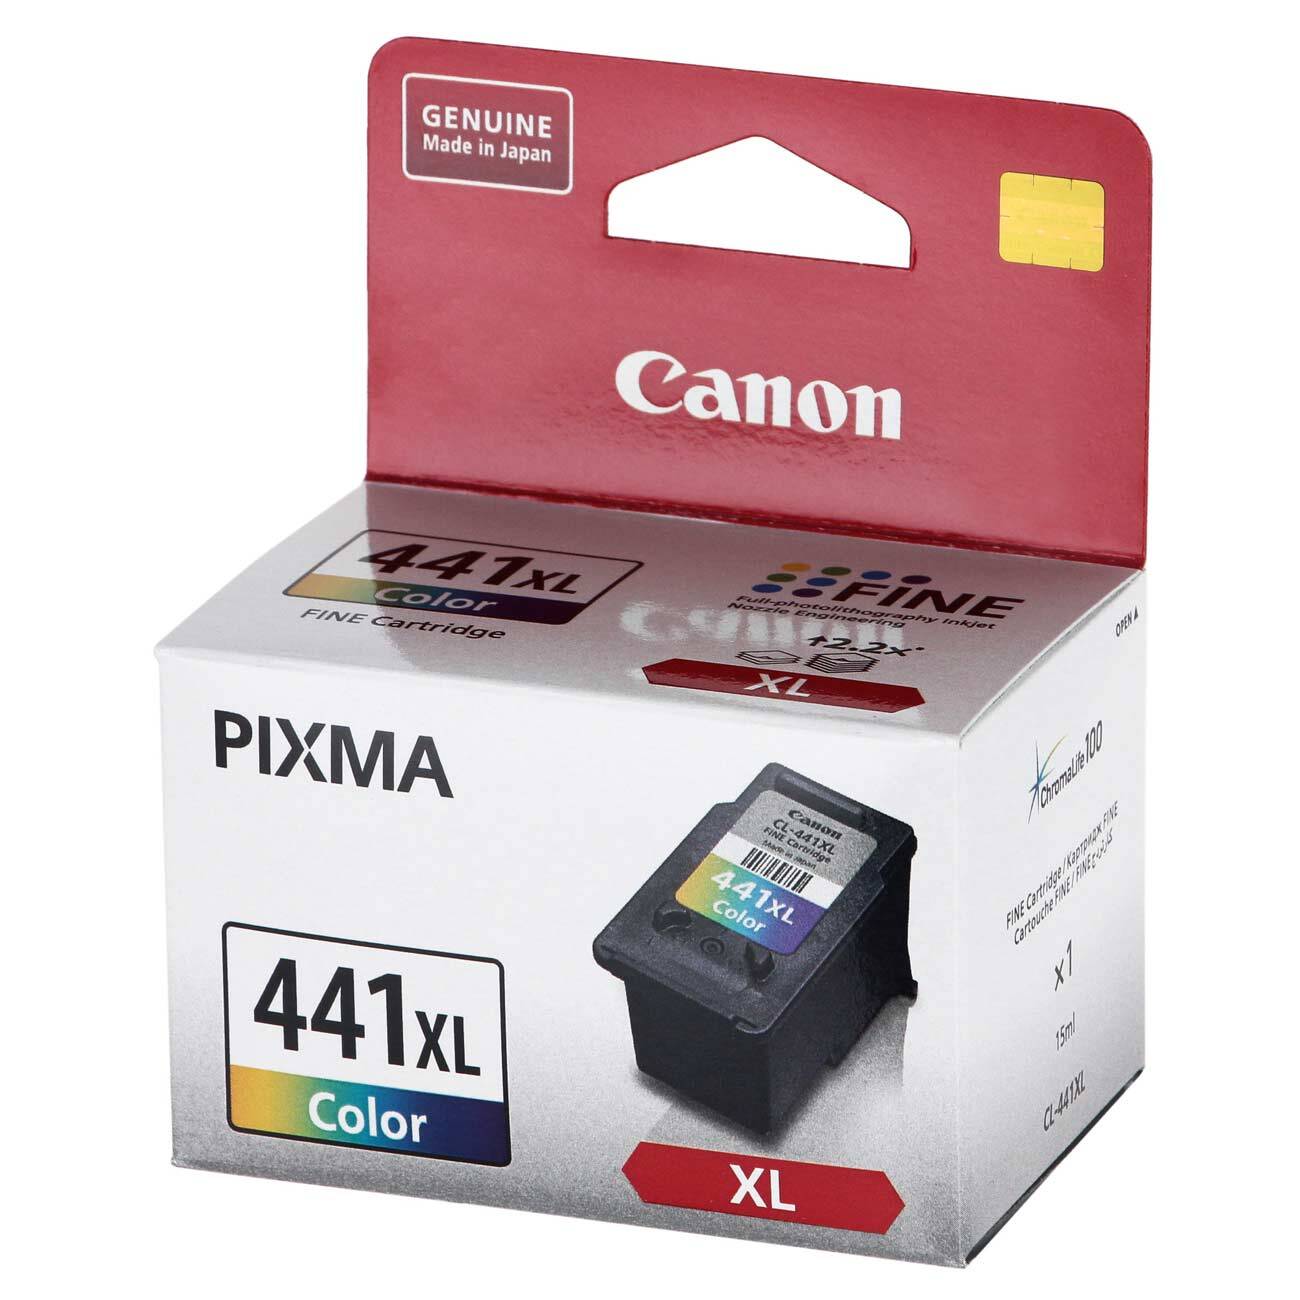 Картриджи canon pixma mg. Картридж 441xl Canon. Canon CL-441. Картридж для принтера Canon 441. Картридж струйный Canon CL-441.